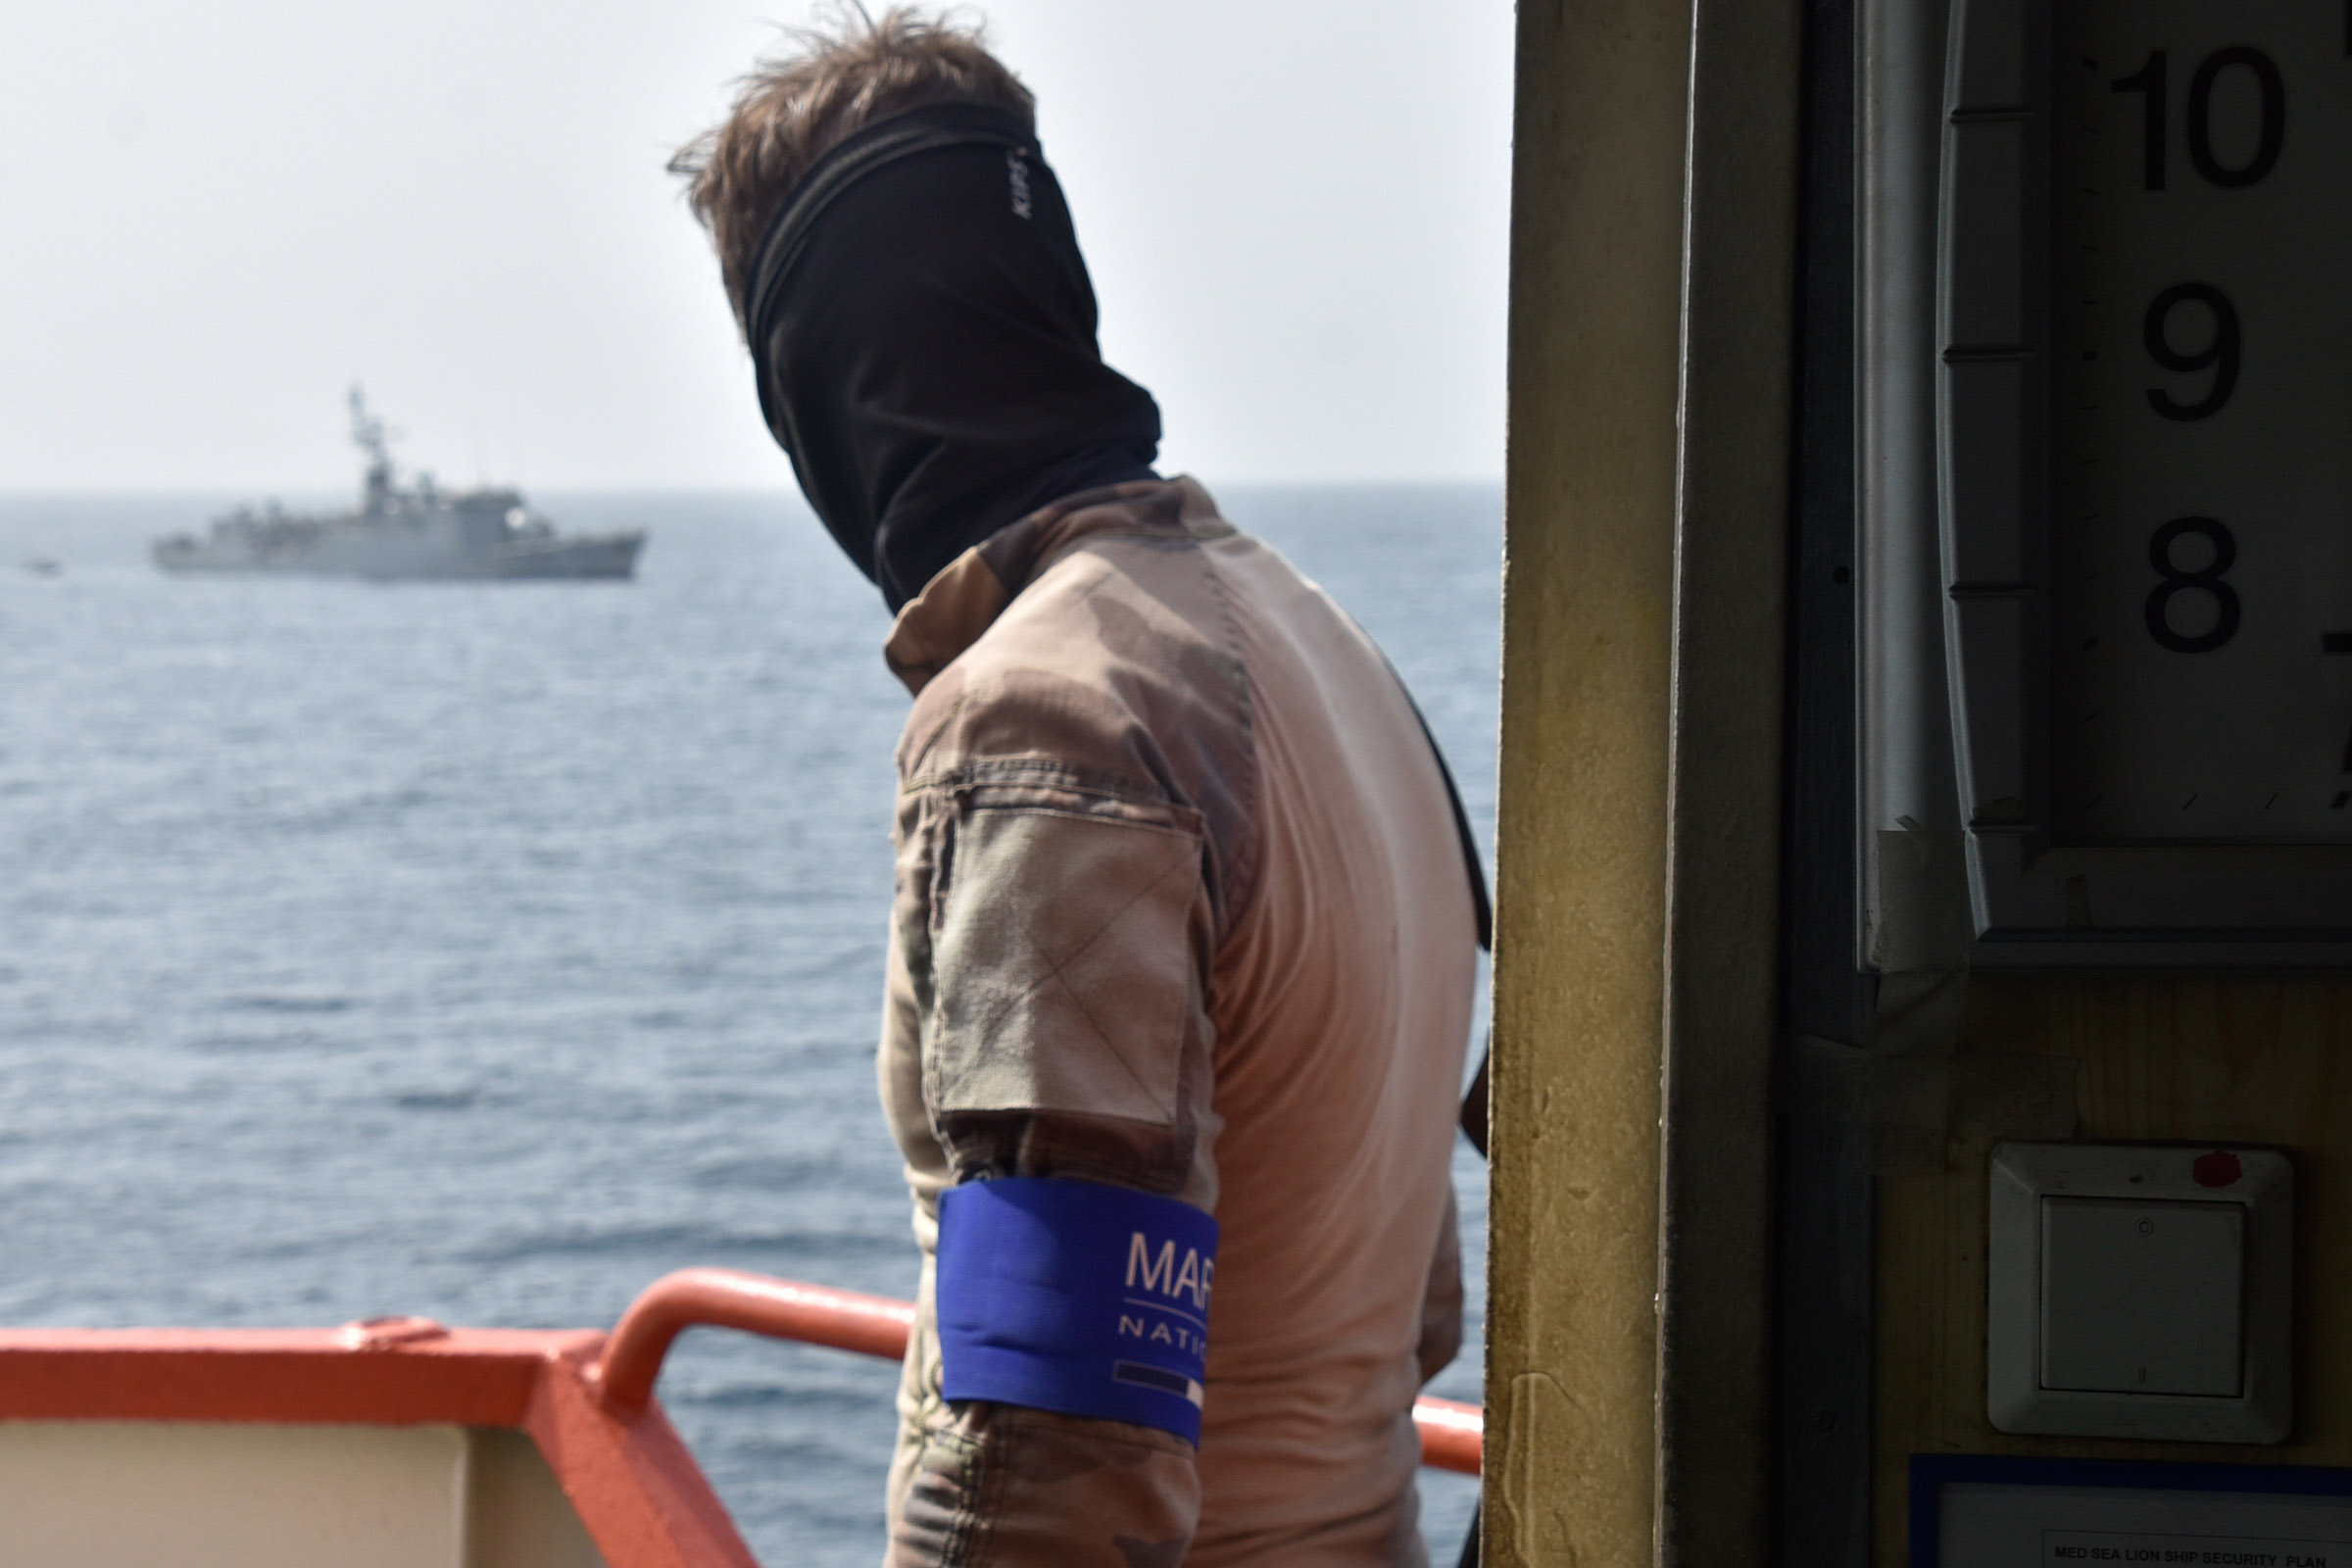 The Offshore Patrol Vessel Premier-maître L’Her seizes 4.7 tonnes of cocaine off the African coast